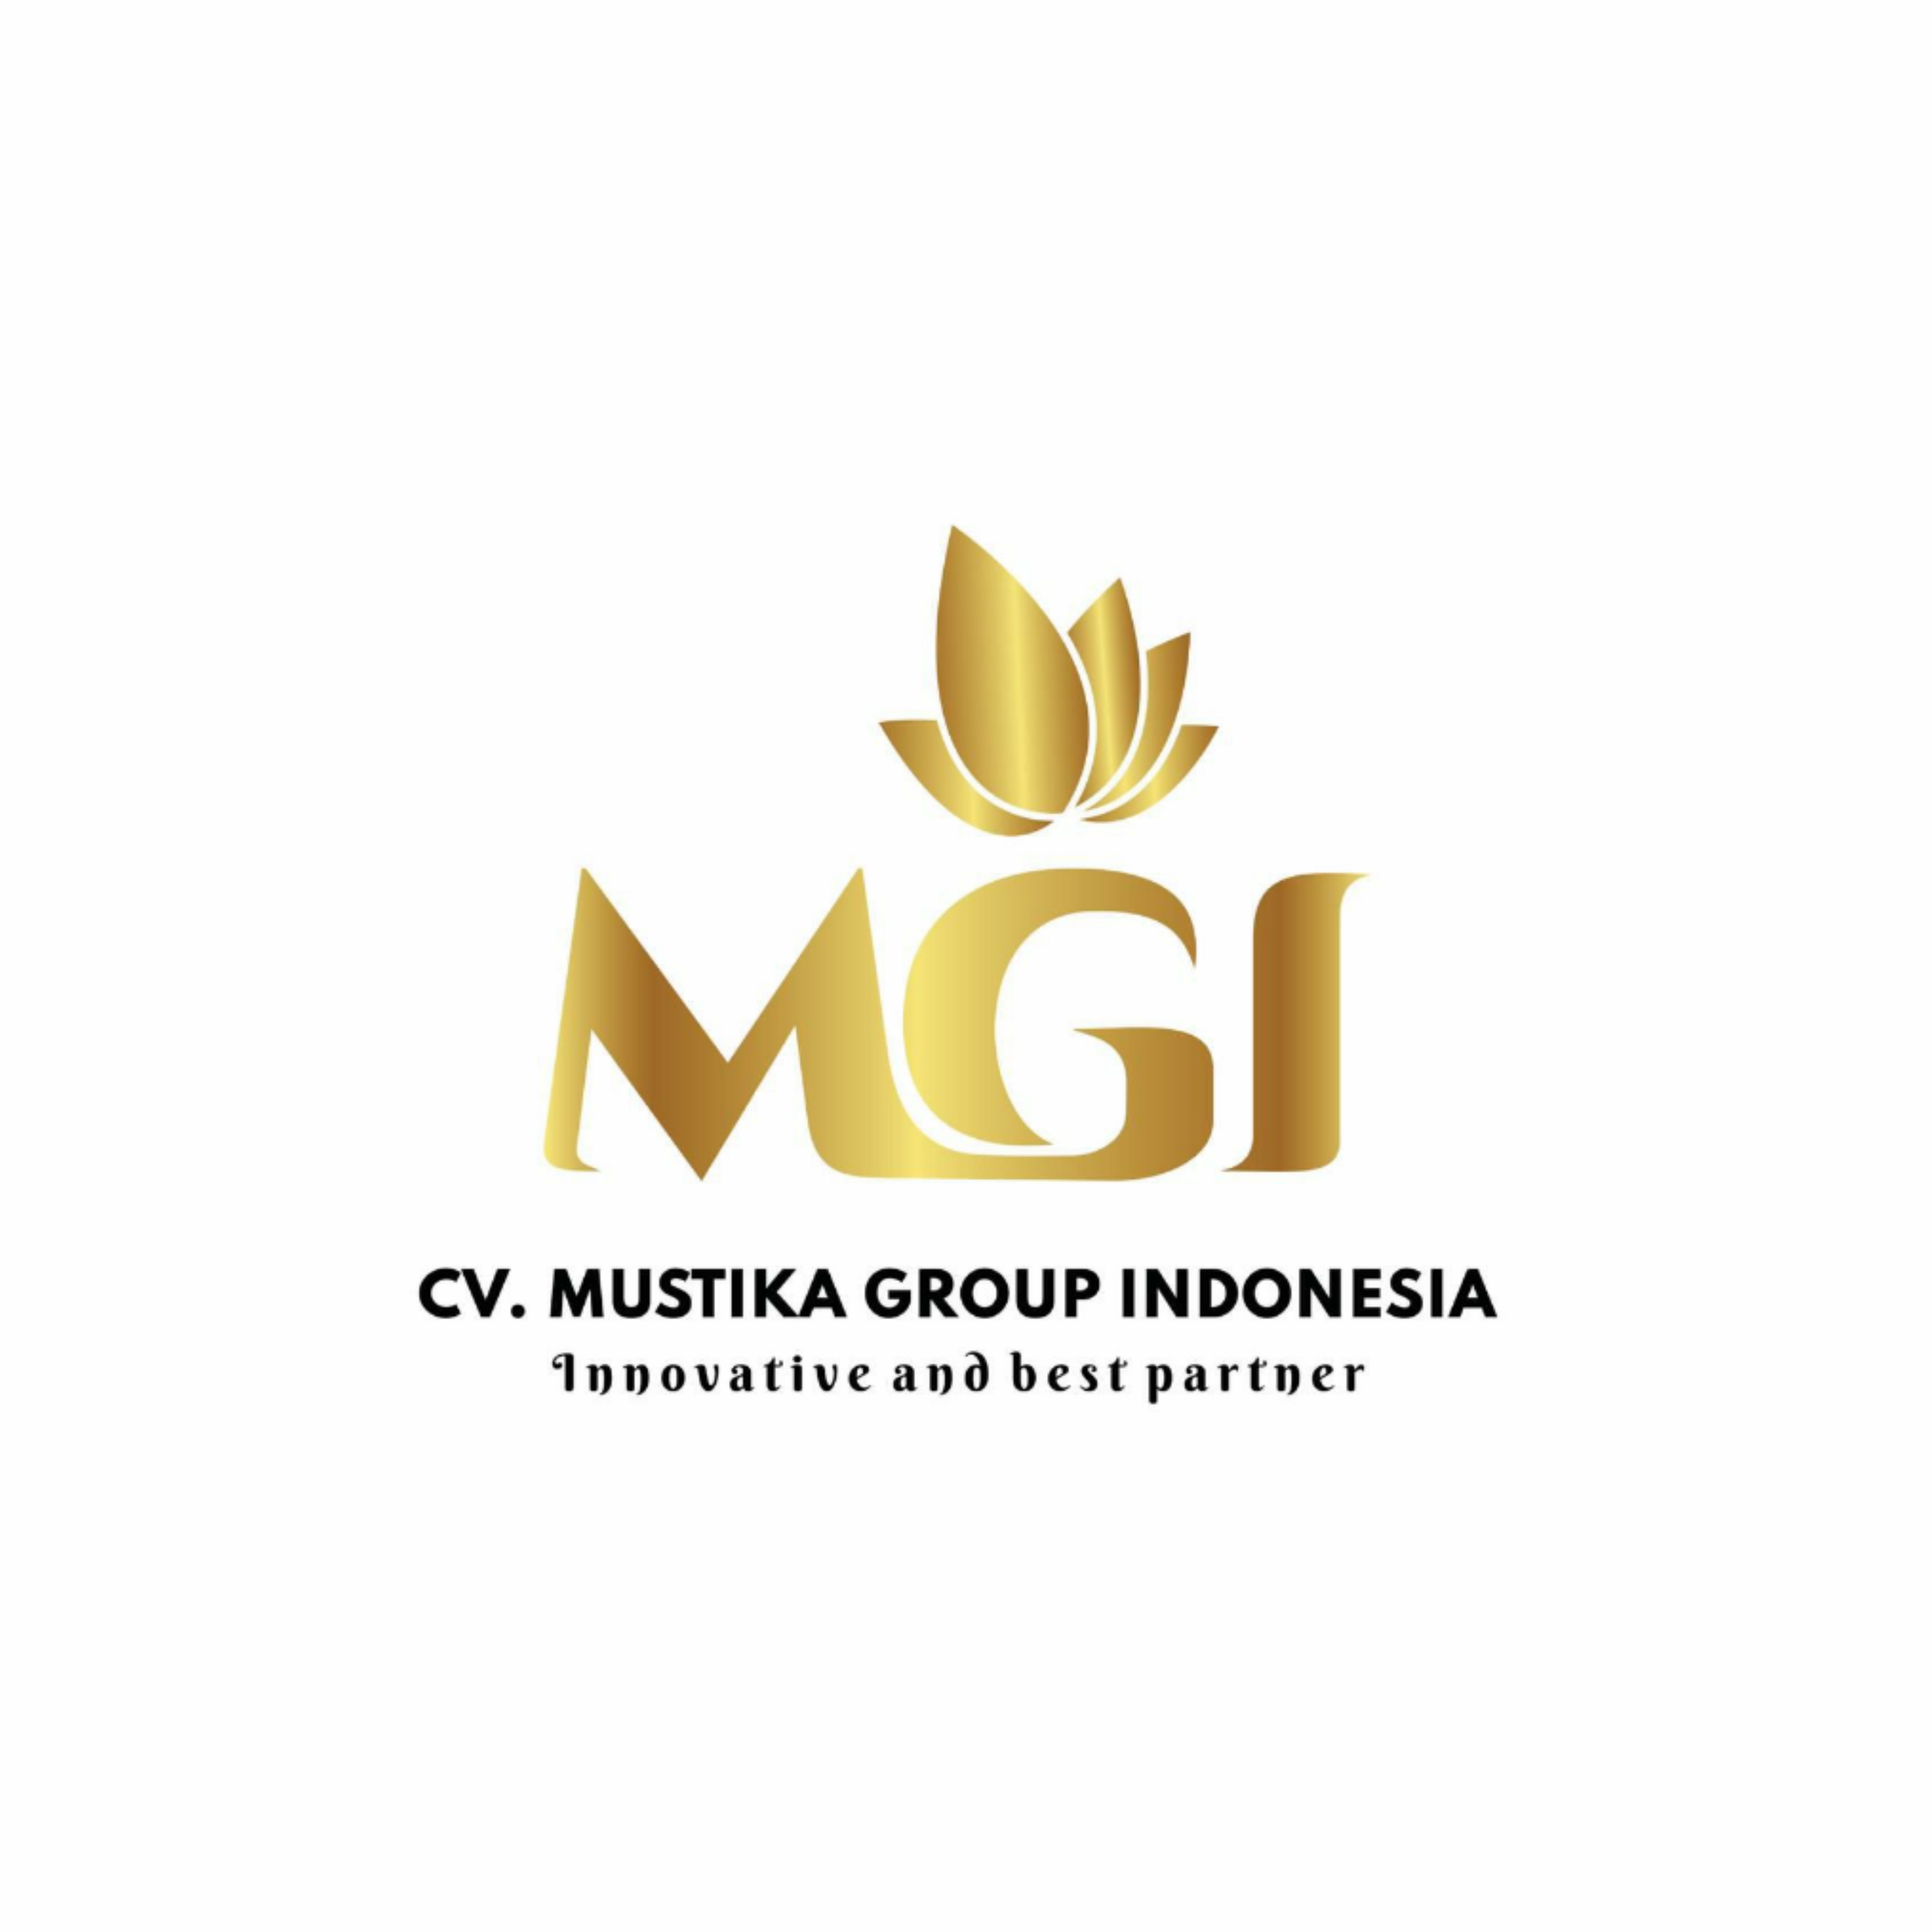 CV. Mustika Group Indonesia